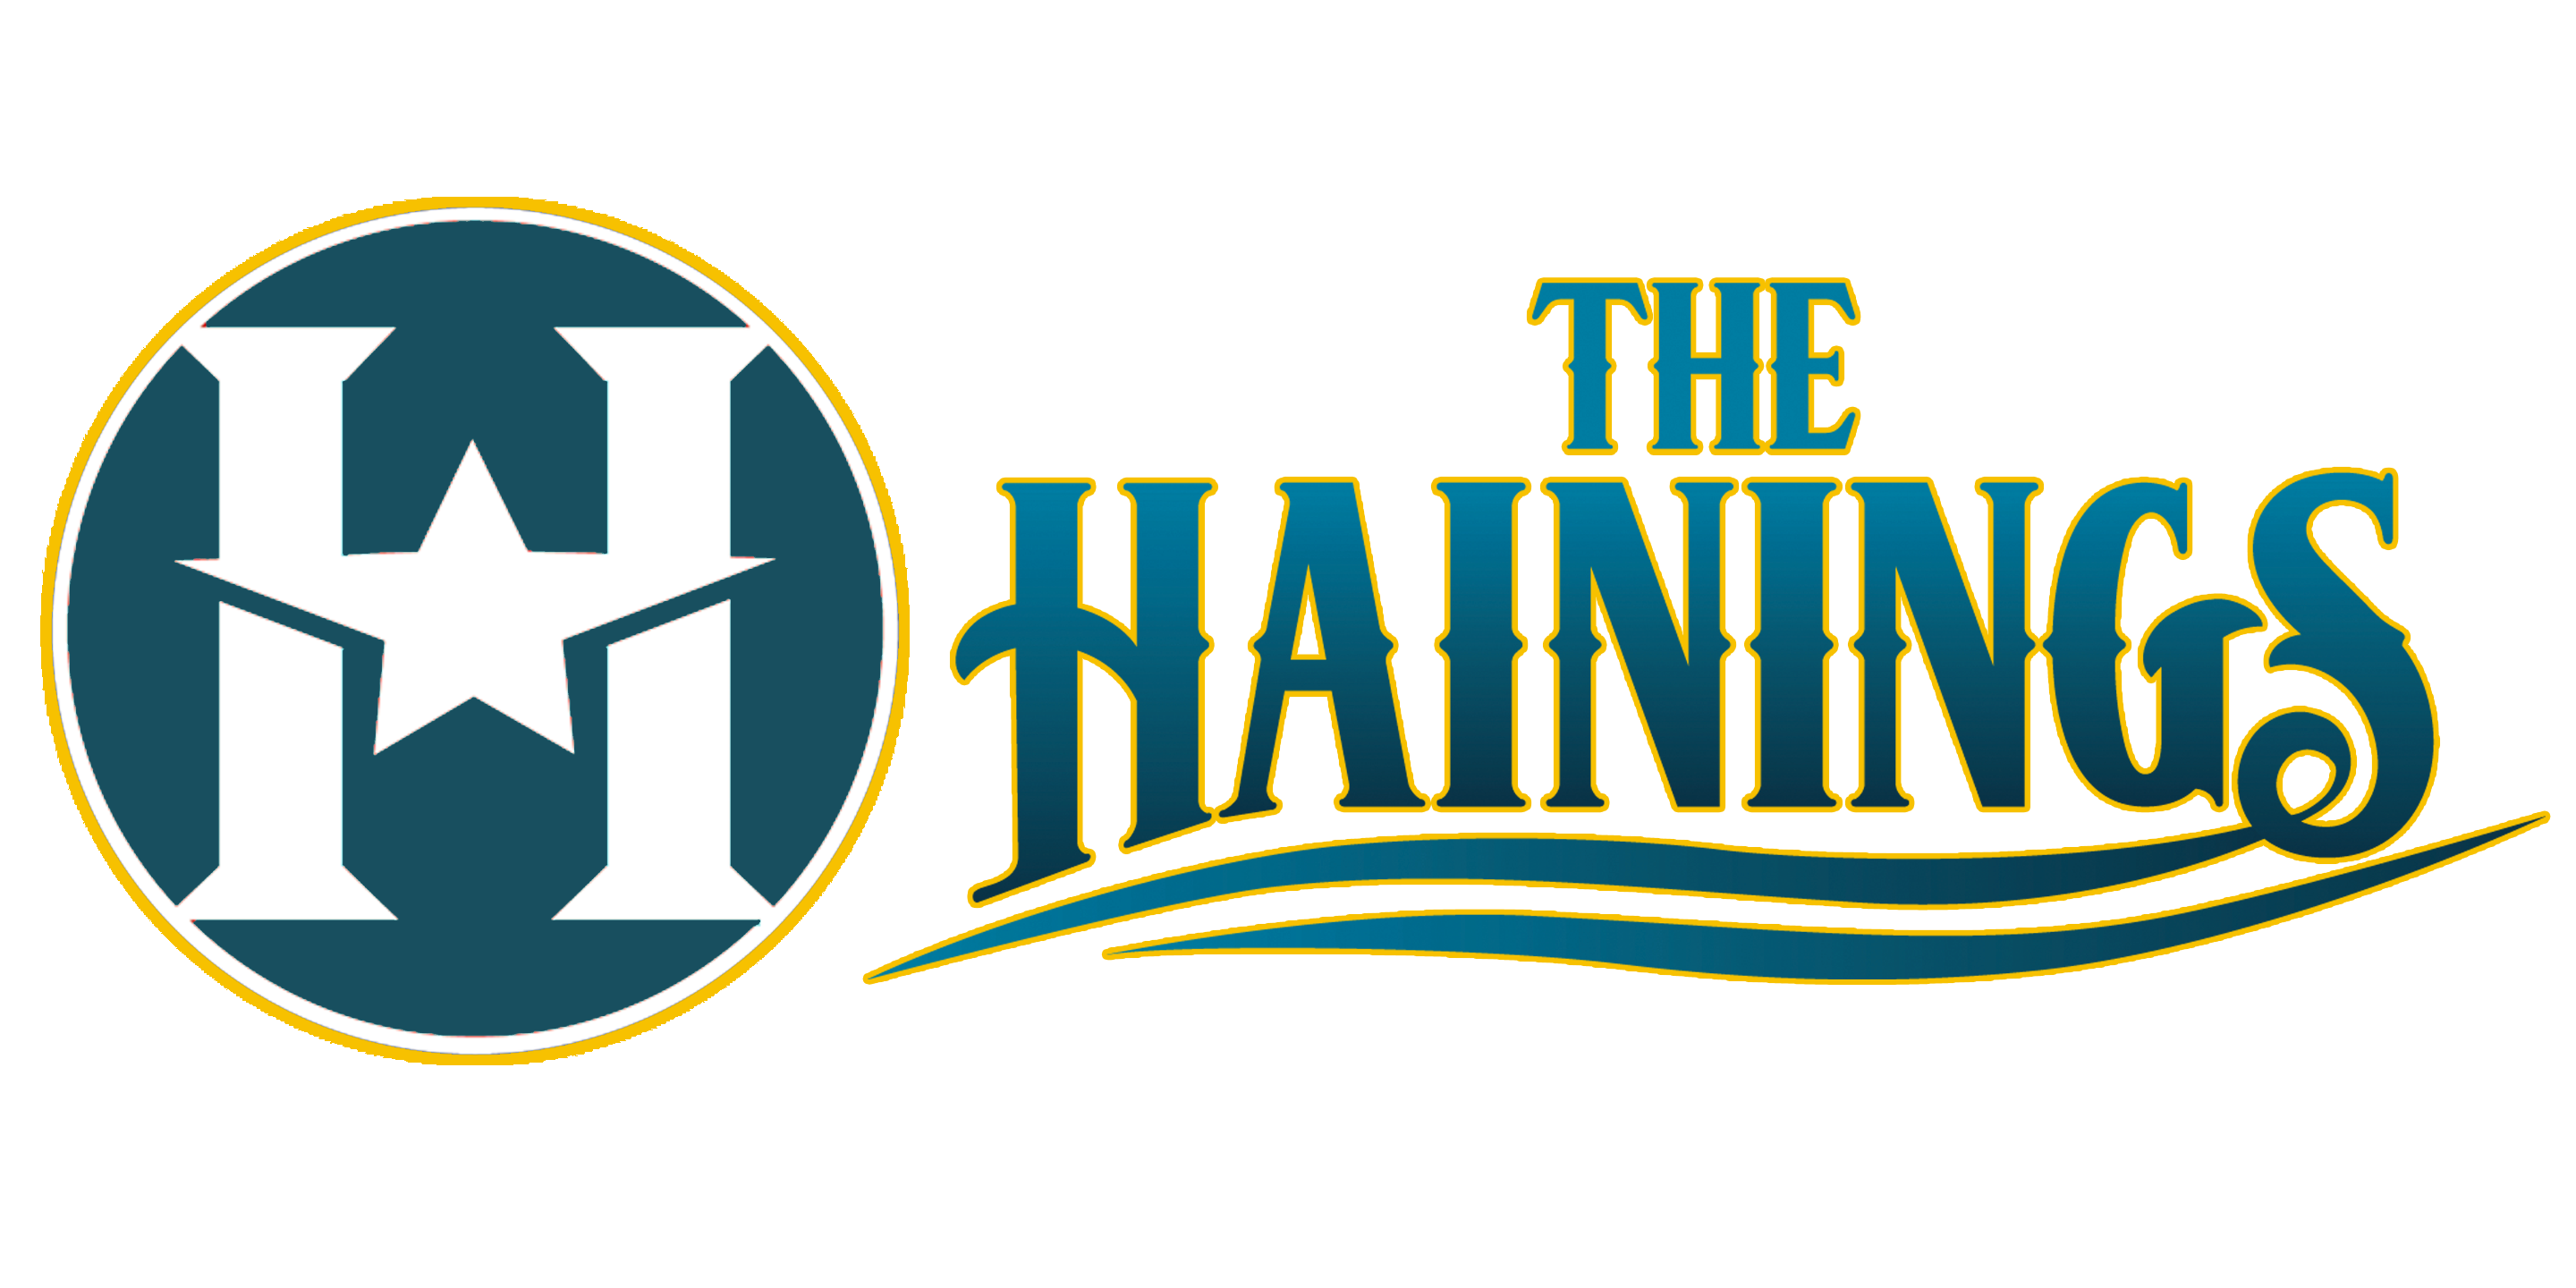 The Hainings